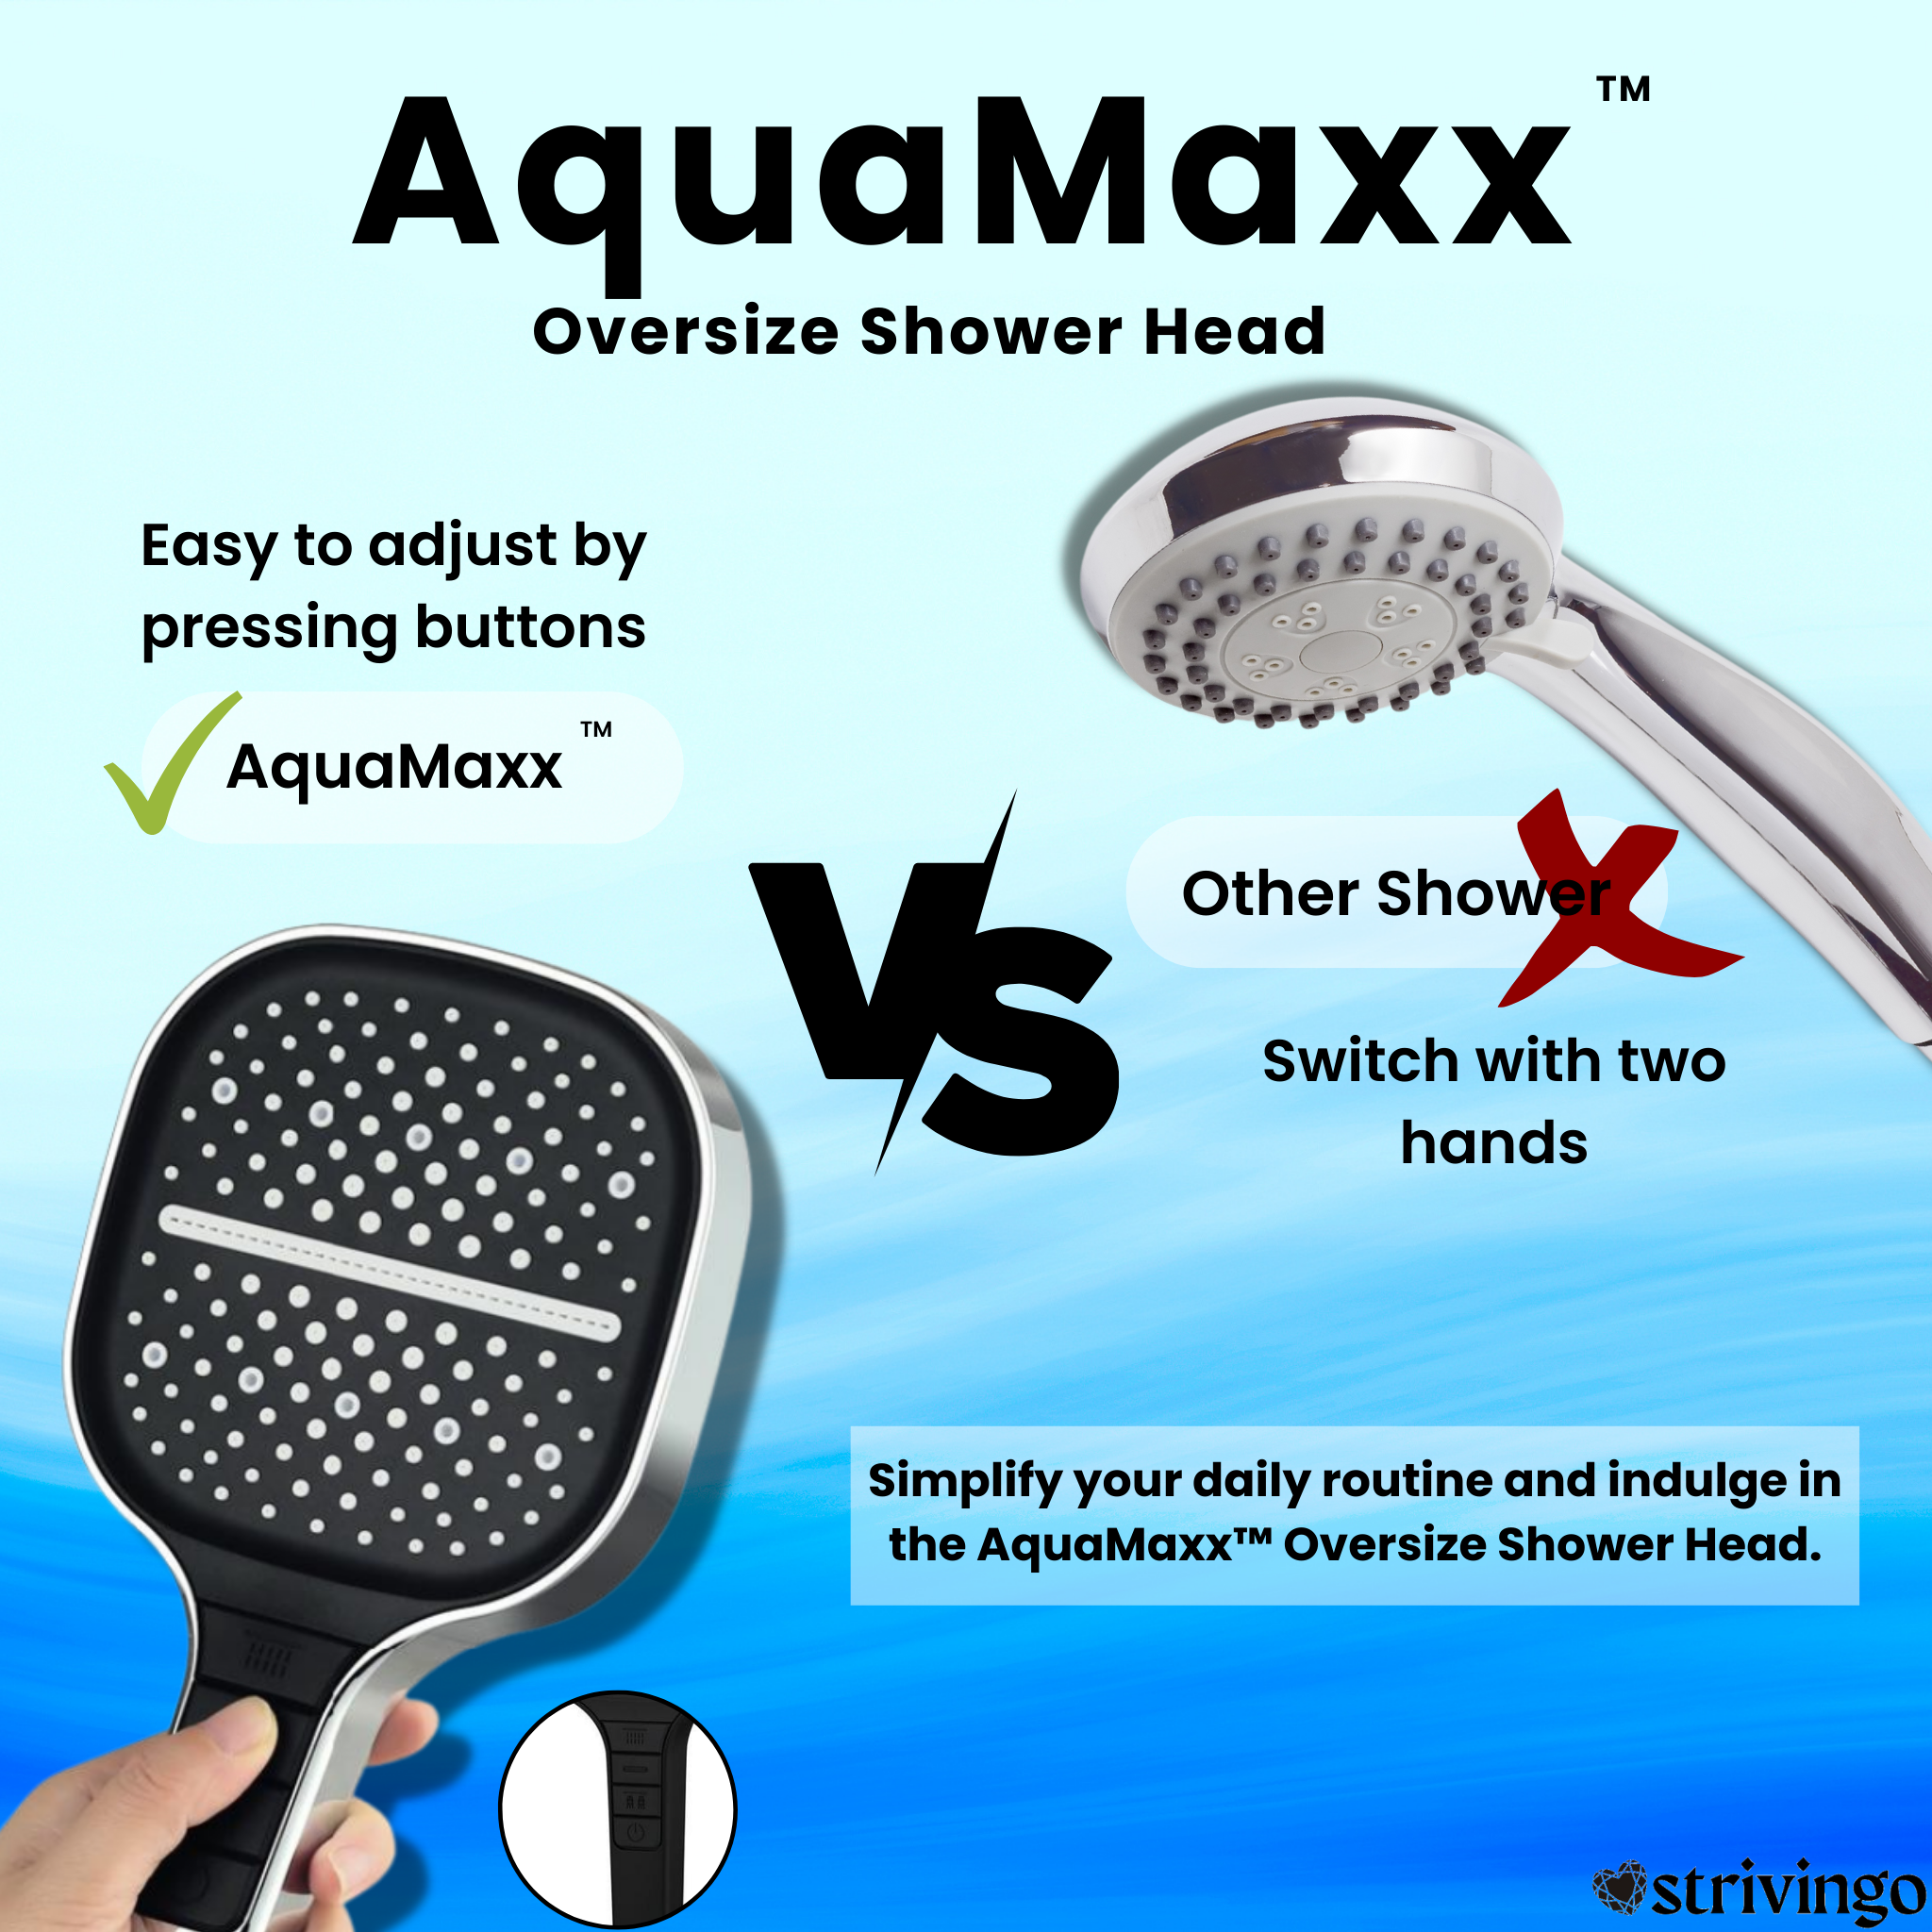 AquaMaxx™ Oversized 7 Modes Shower Head incl. Hose & Holder